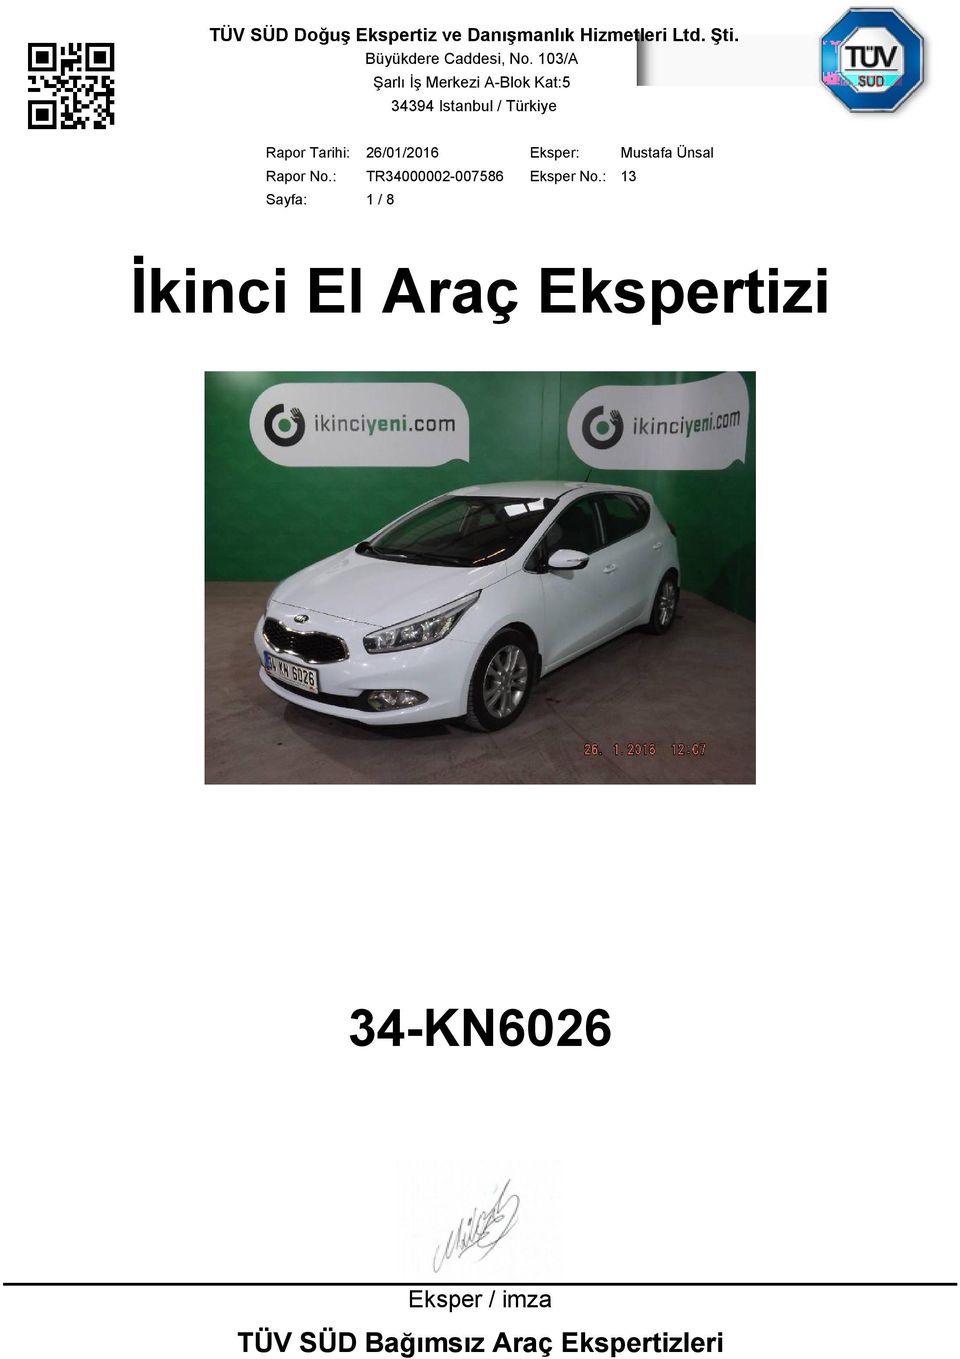 34-KN6026 Eksper / imza